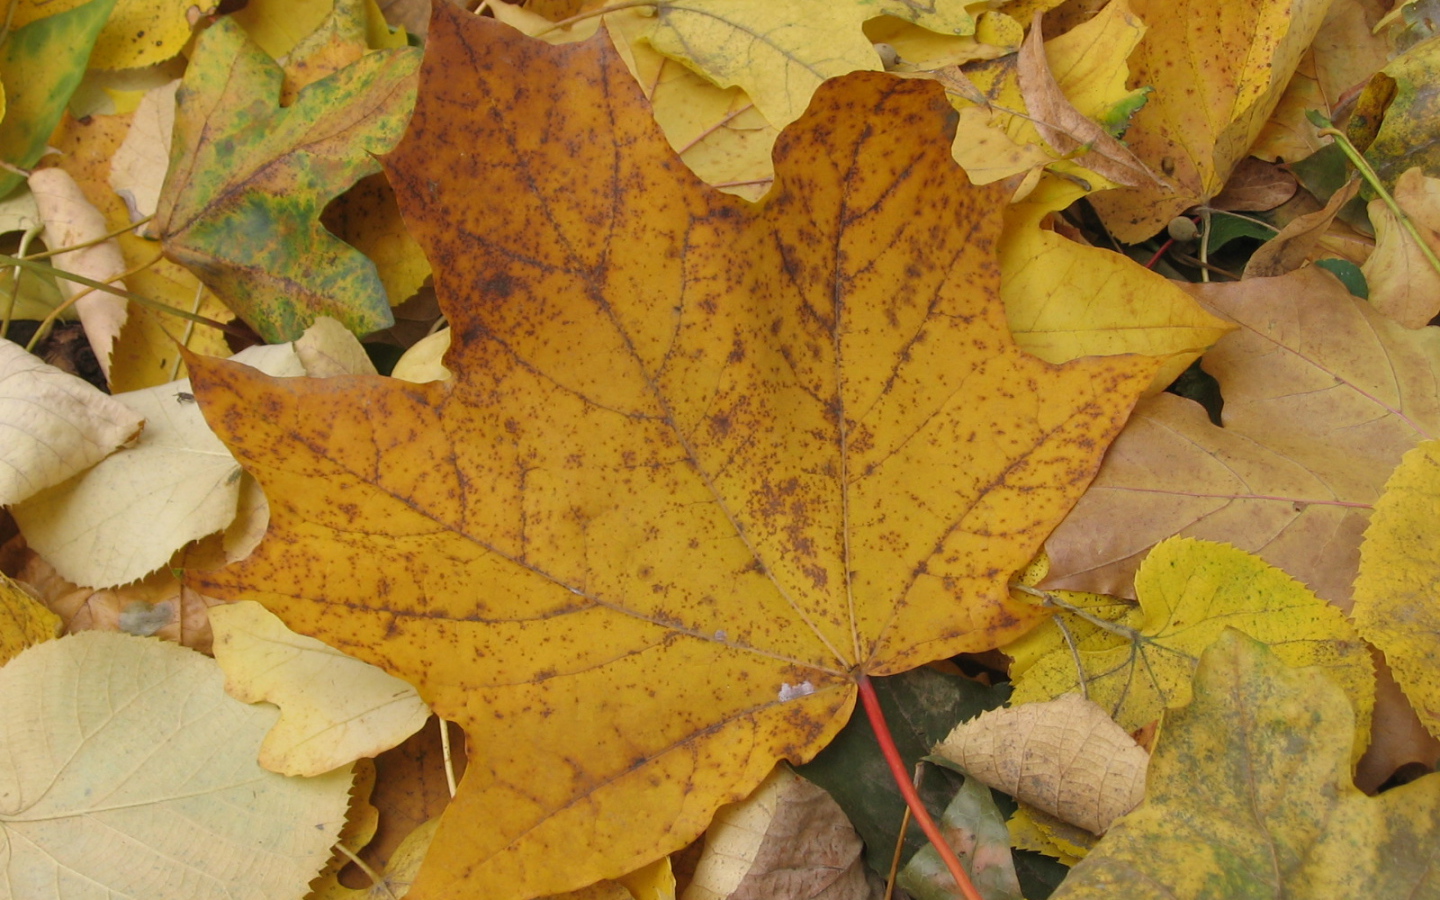 Old Autumn leaf